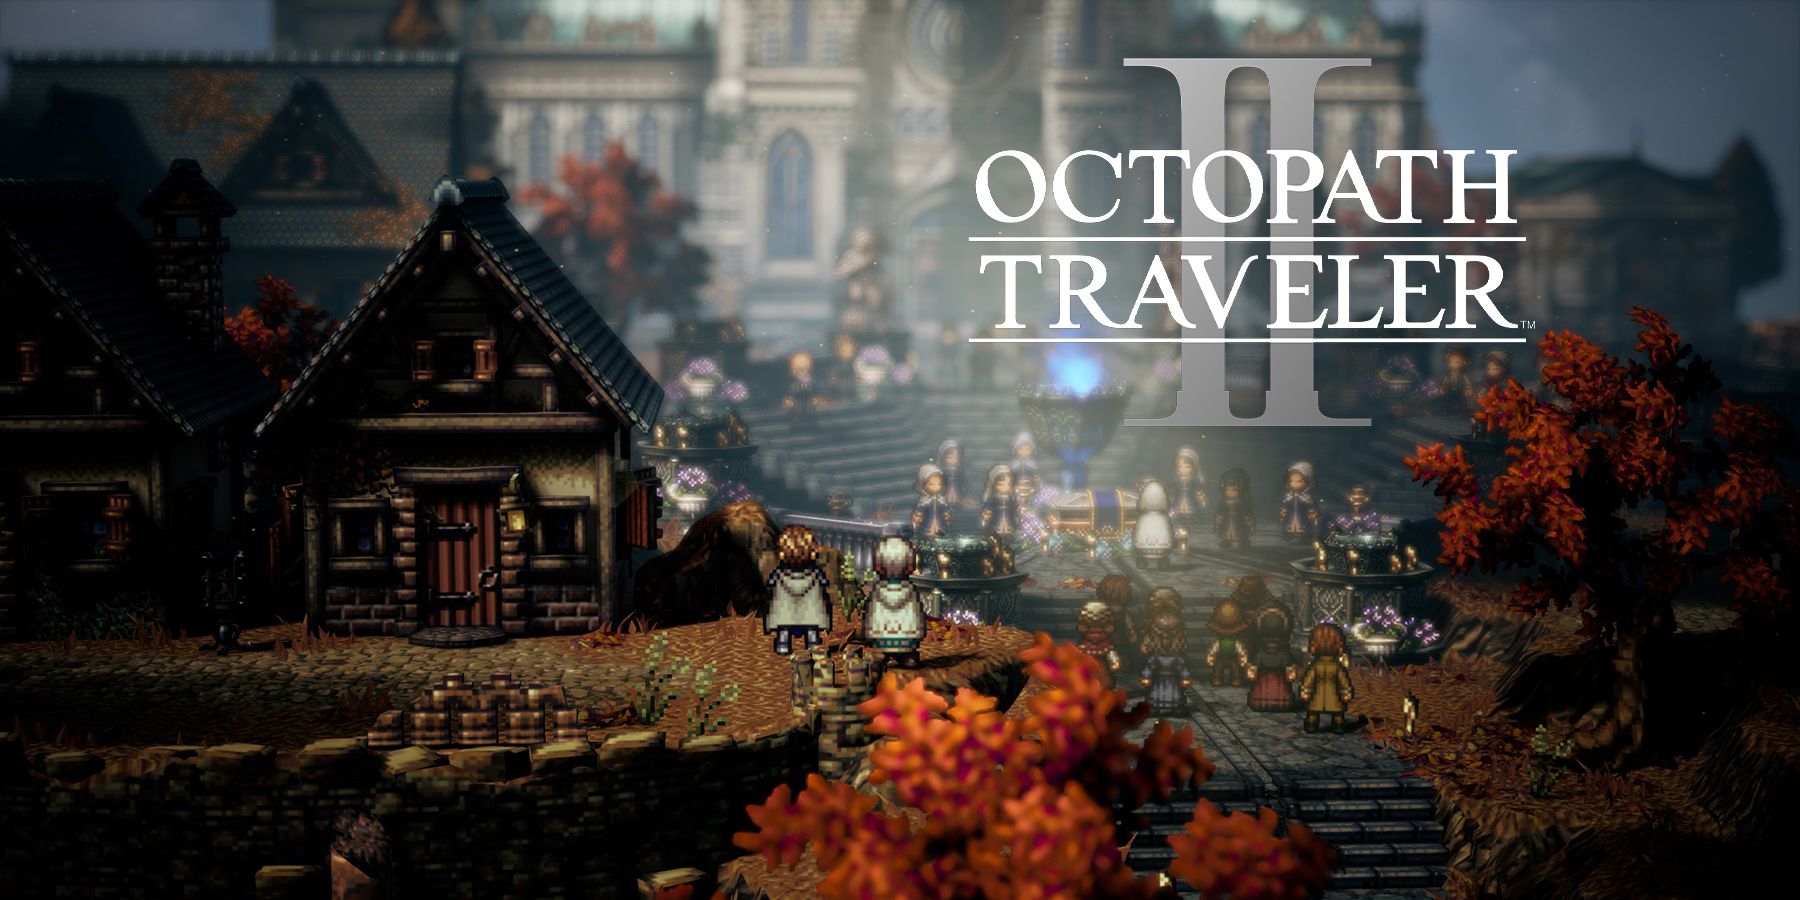 Octopath Traveler II Review